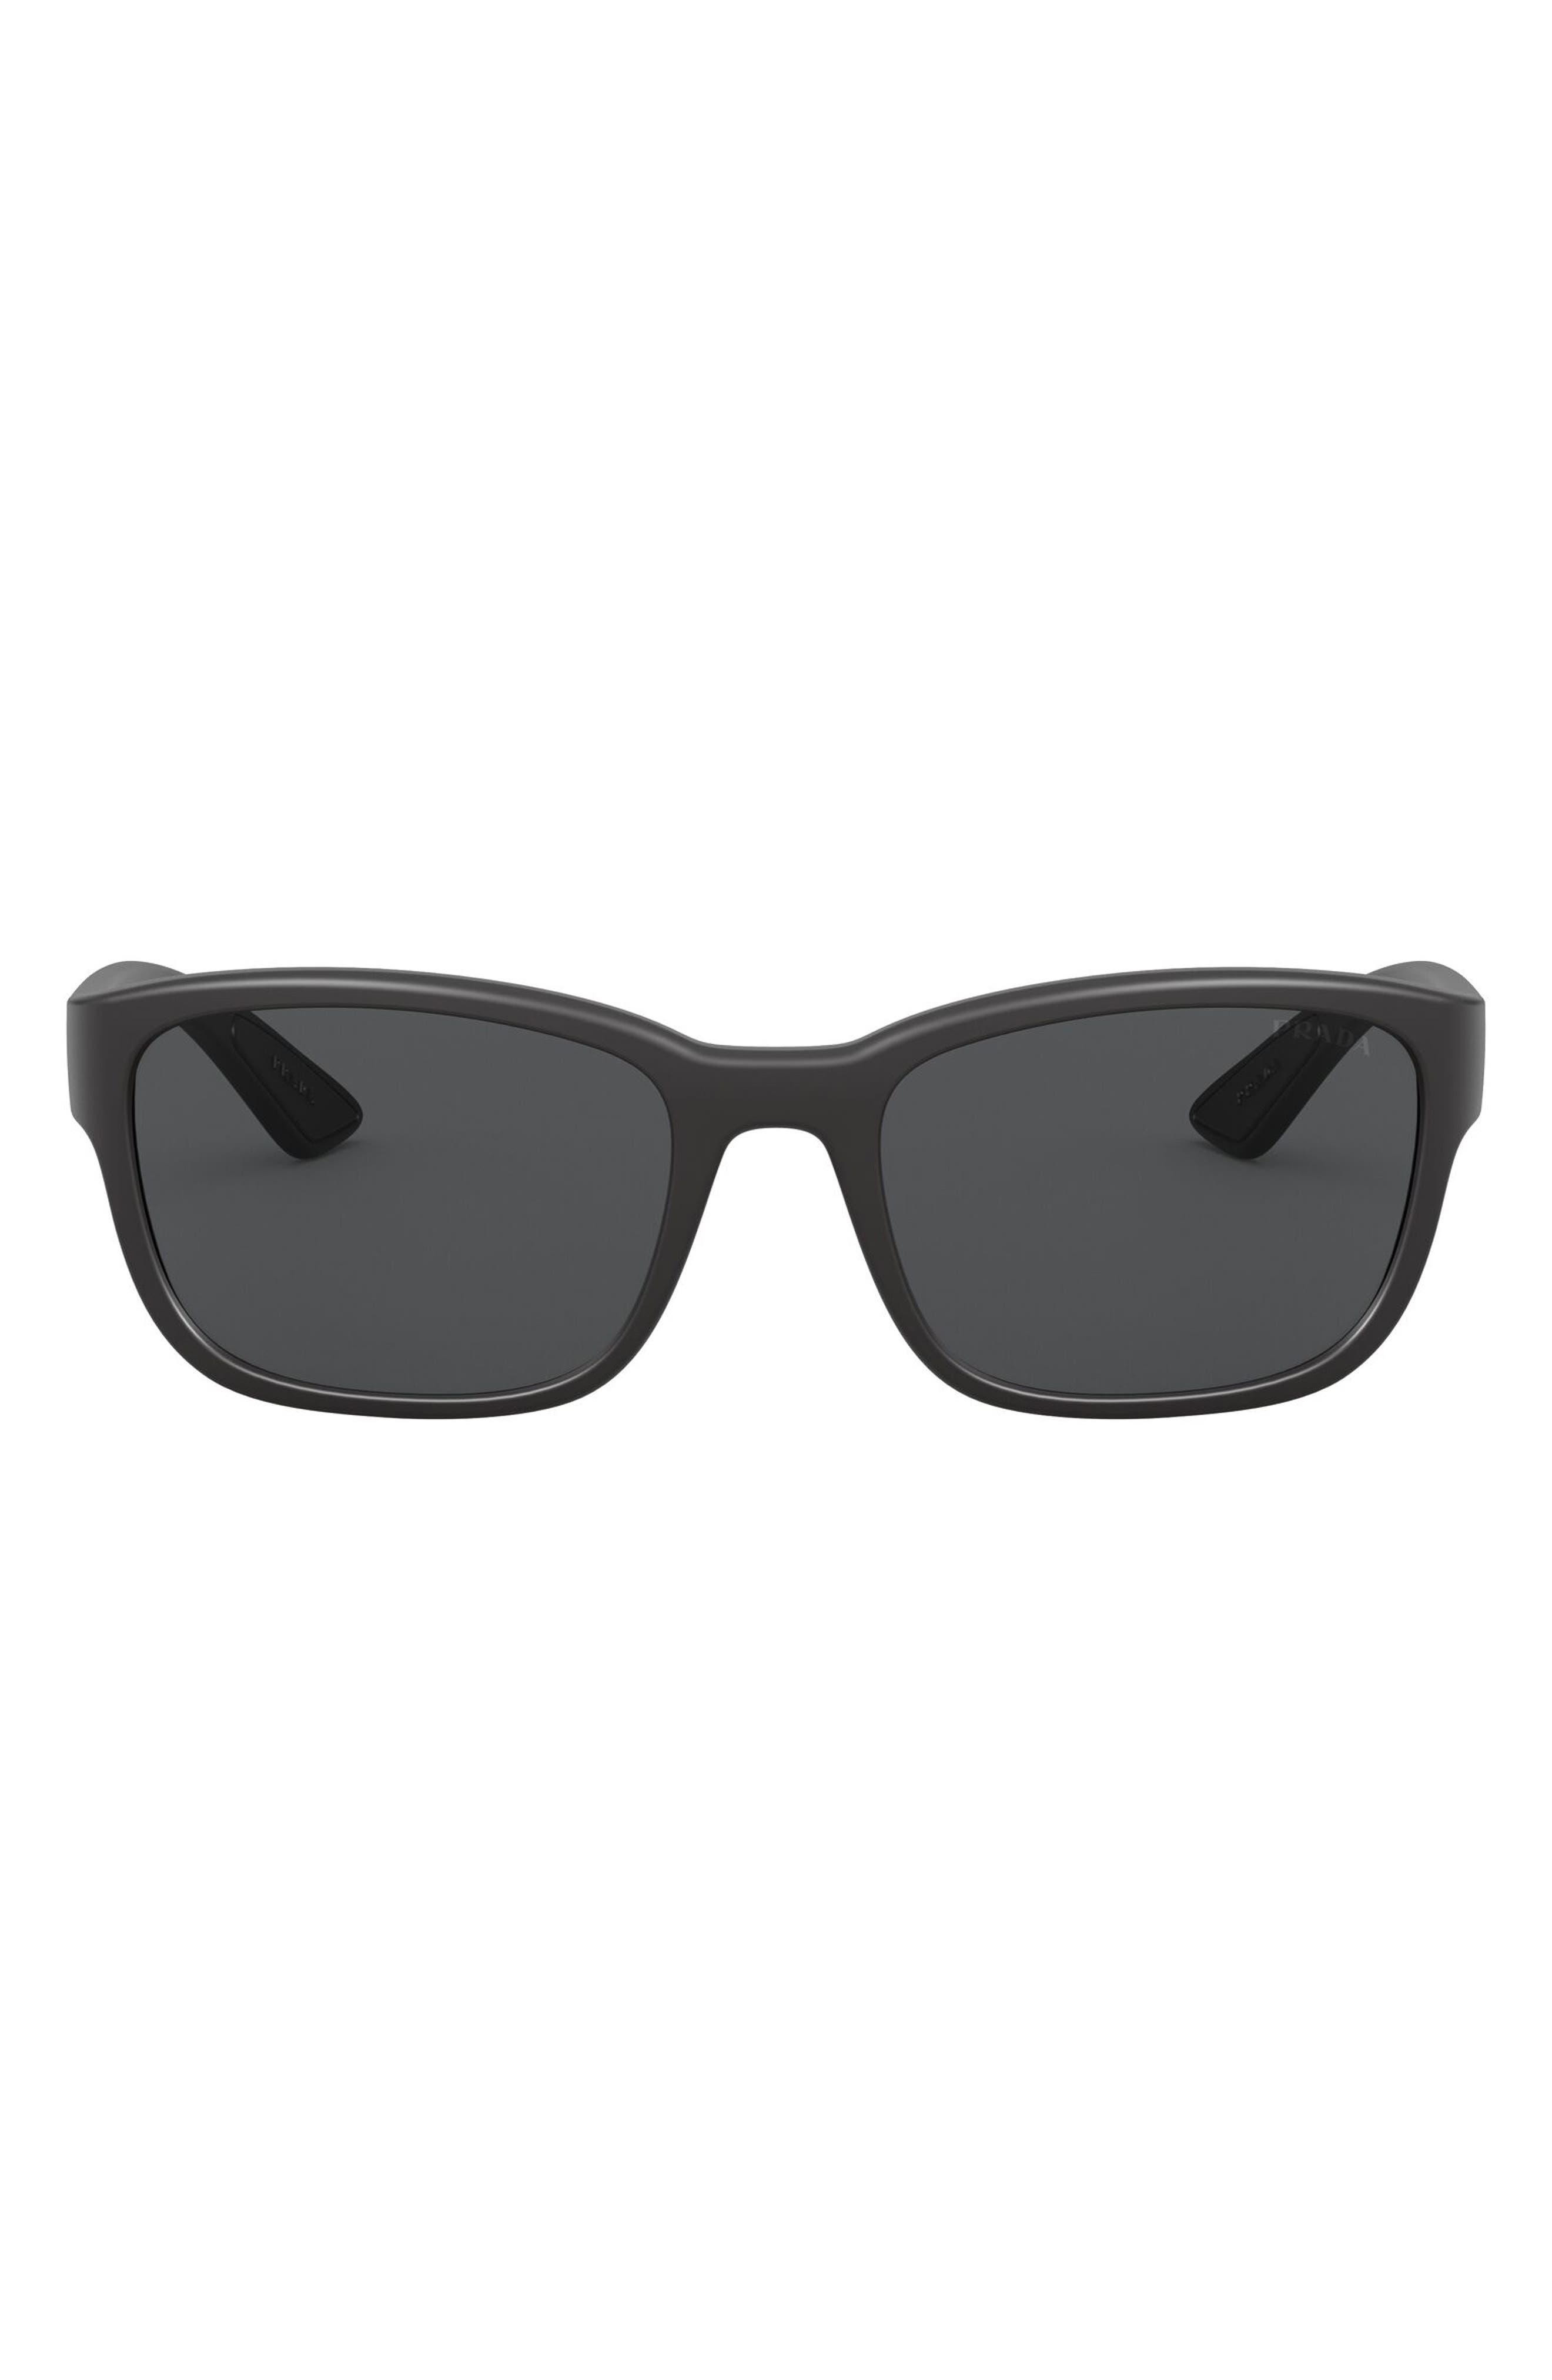 Prada Pillow 57mm Rectangle Sunglasses in Black Demi Shiny/Dark Grey at Nordstrom